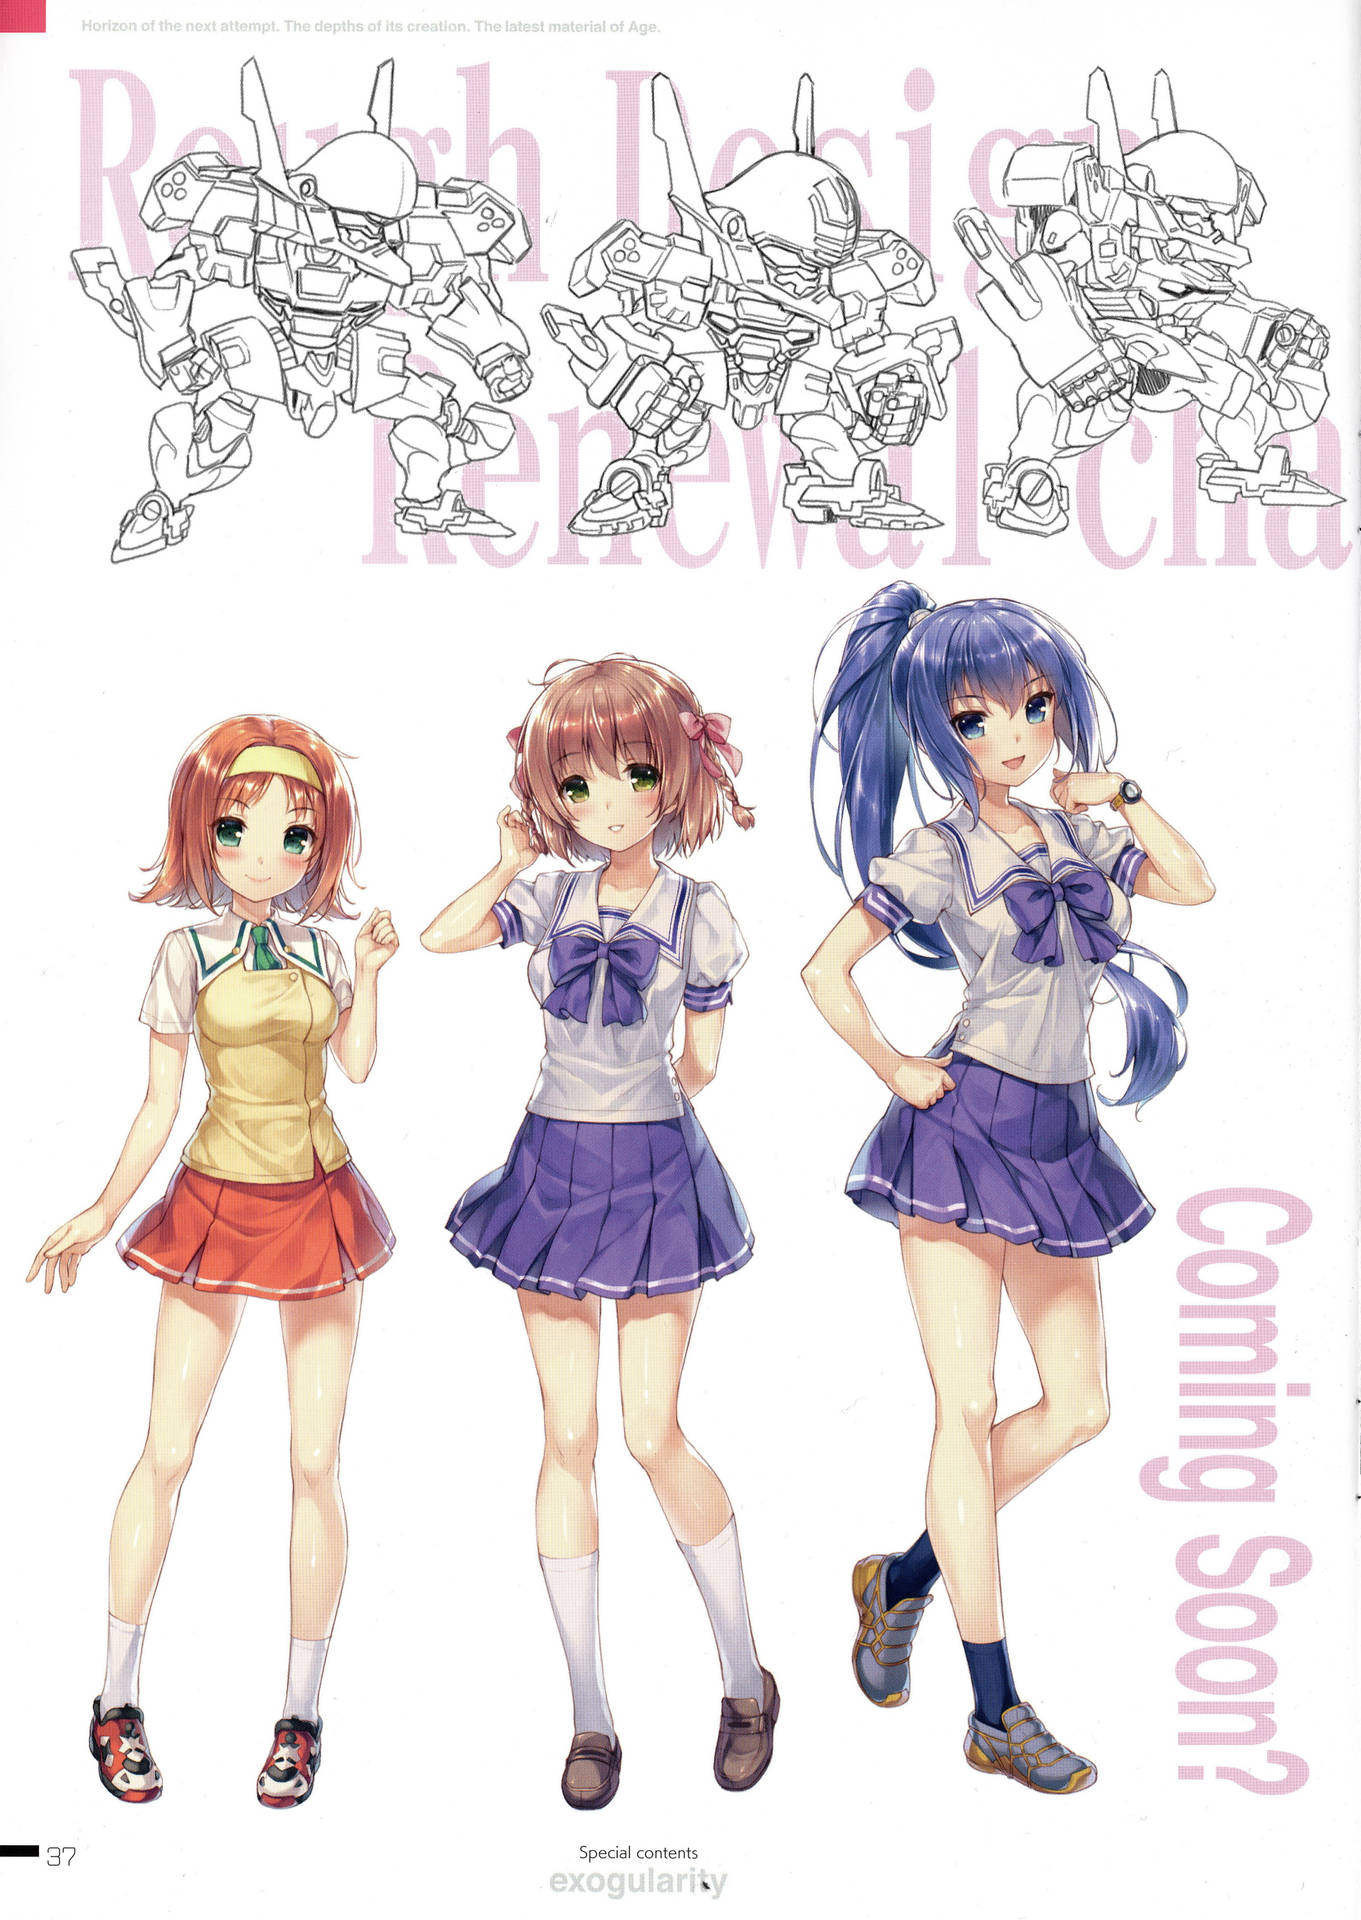 Caption: Main Characters Of Kimi Ga Nozomu Eien Anime Series Background